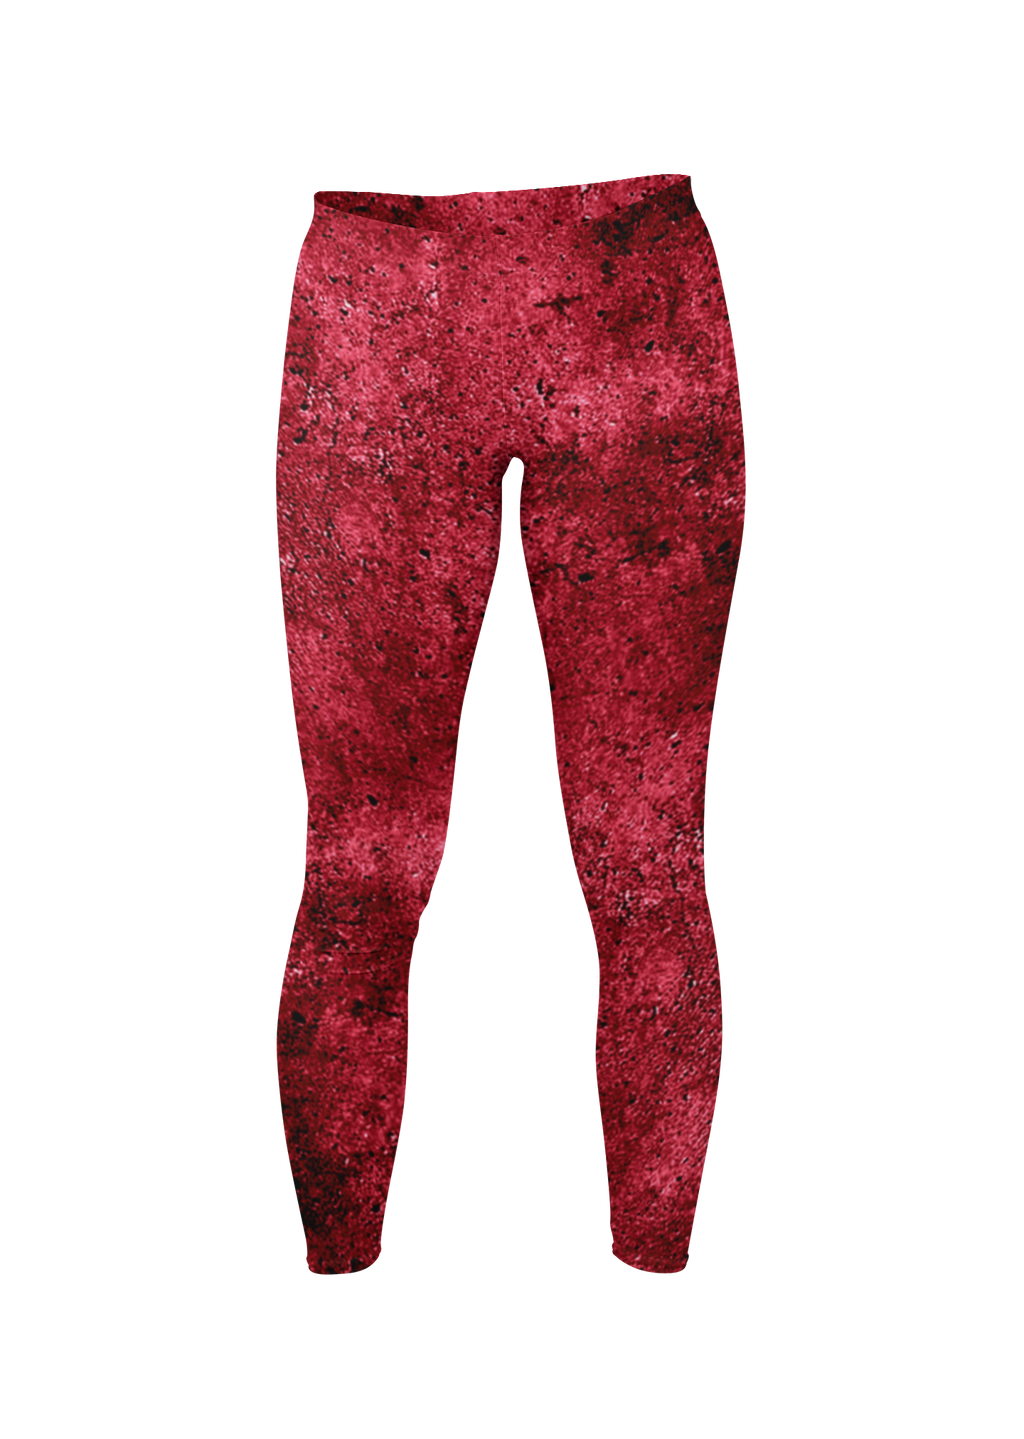 Beni KuL Tough Red Women's Yoga Pant